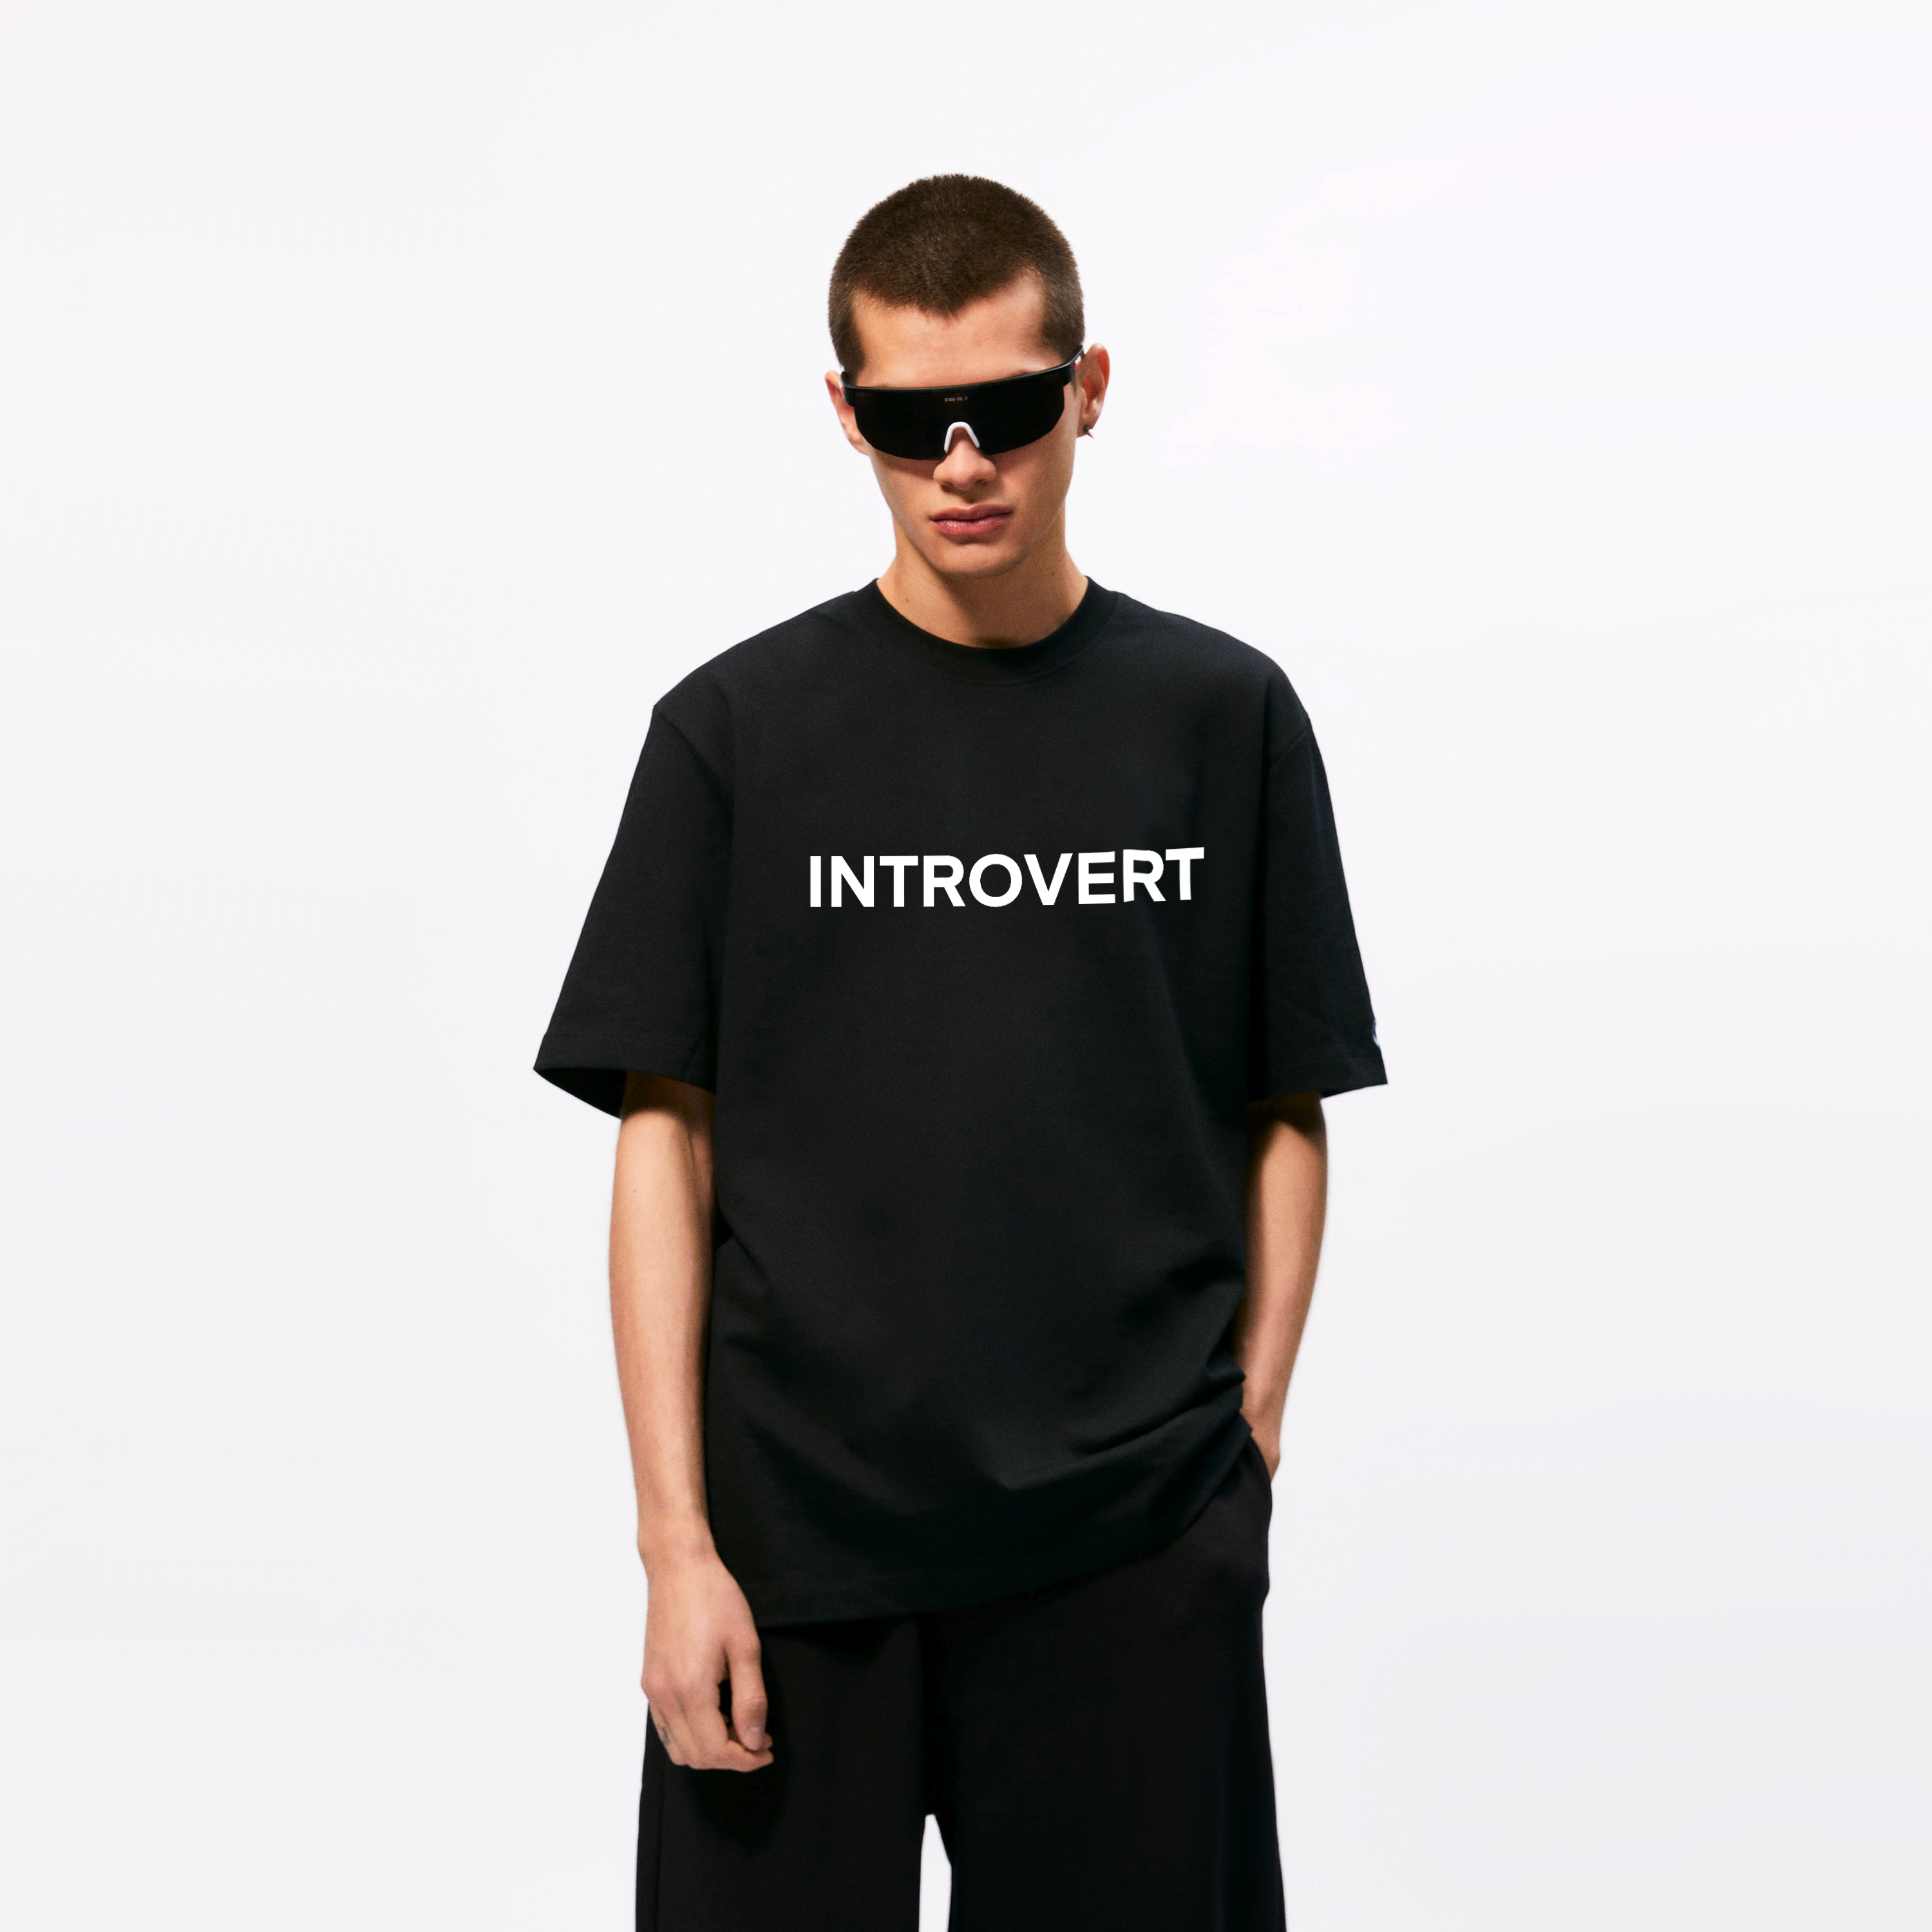 Kix'ies Introvert Social Distancing T-Shirt